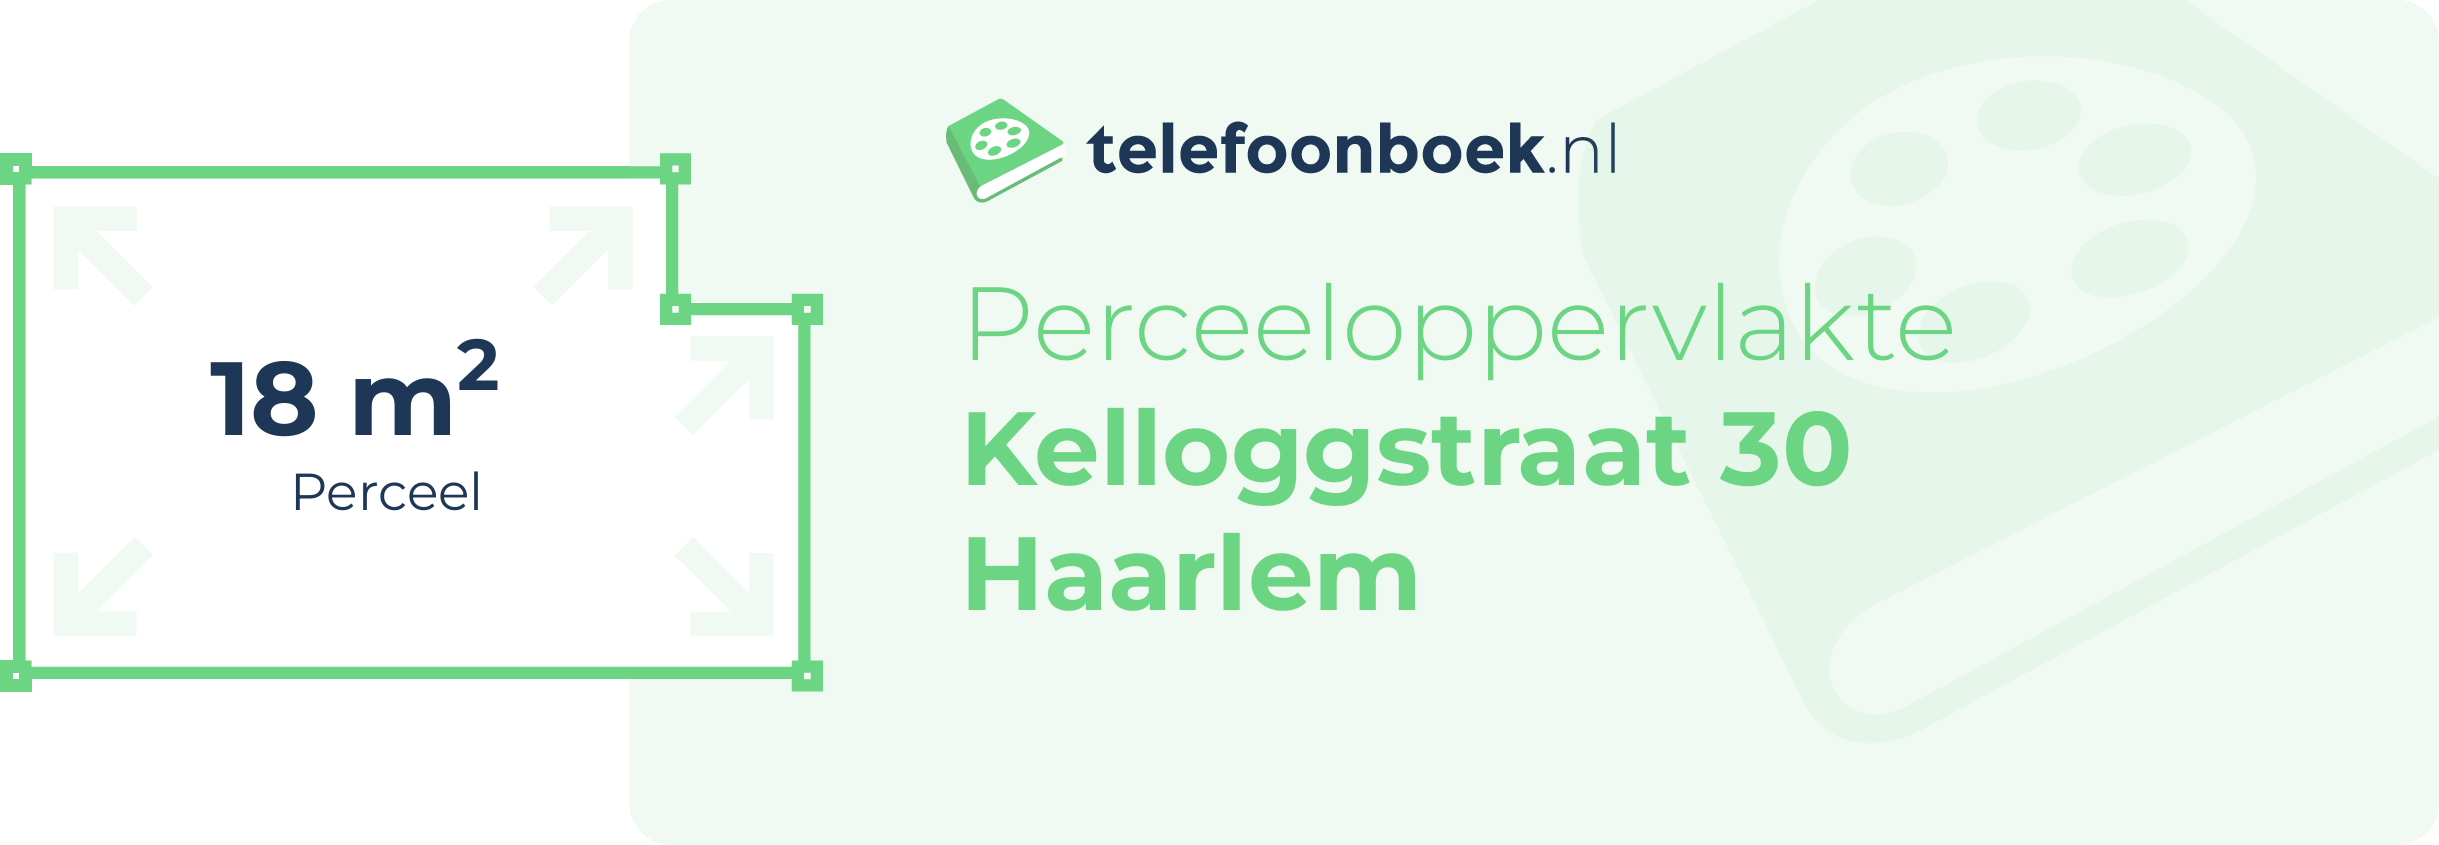 Perceeloppervlakte Kelloggstraat 30 Haarlem